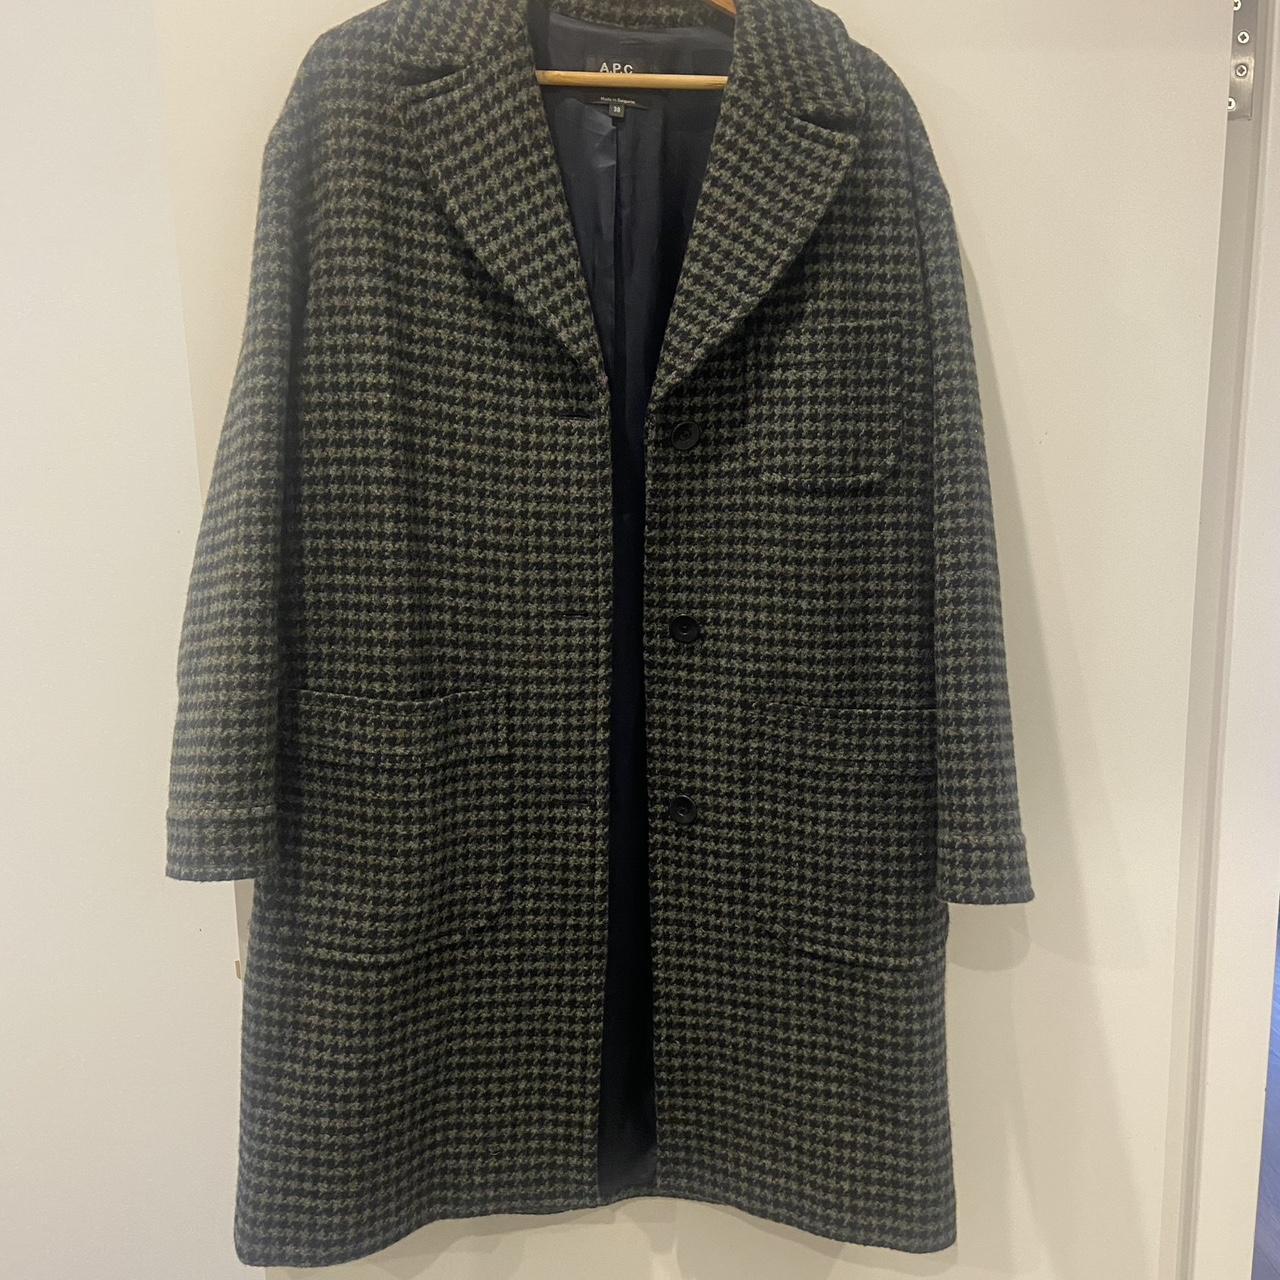 APC OVERSIZED COAT (size 38) - this coat is very... - Depop